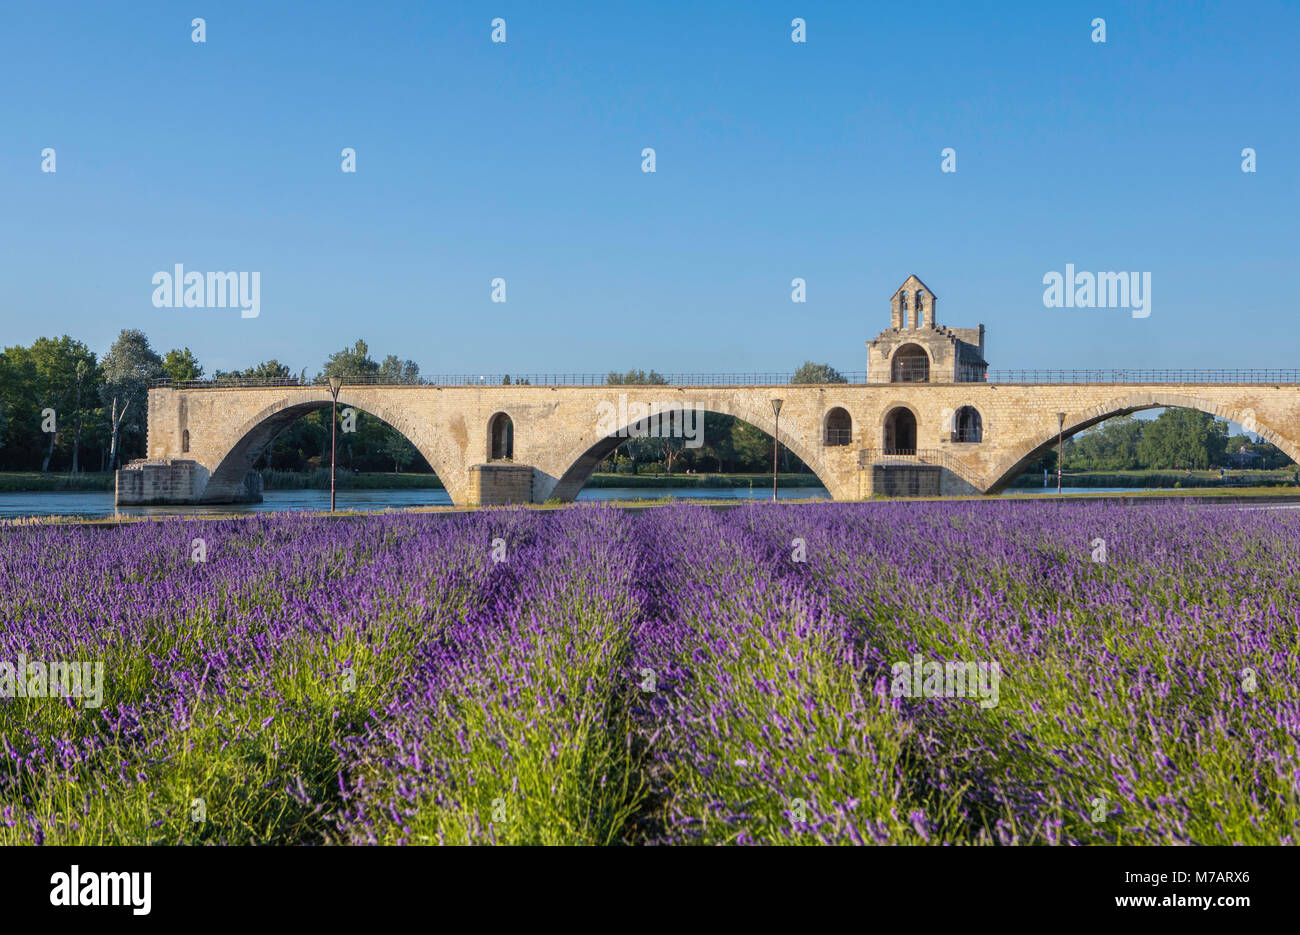 France, Provence region, Avignon city, St. Benezet Bridge, W.H., lavanda field Stock Photo